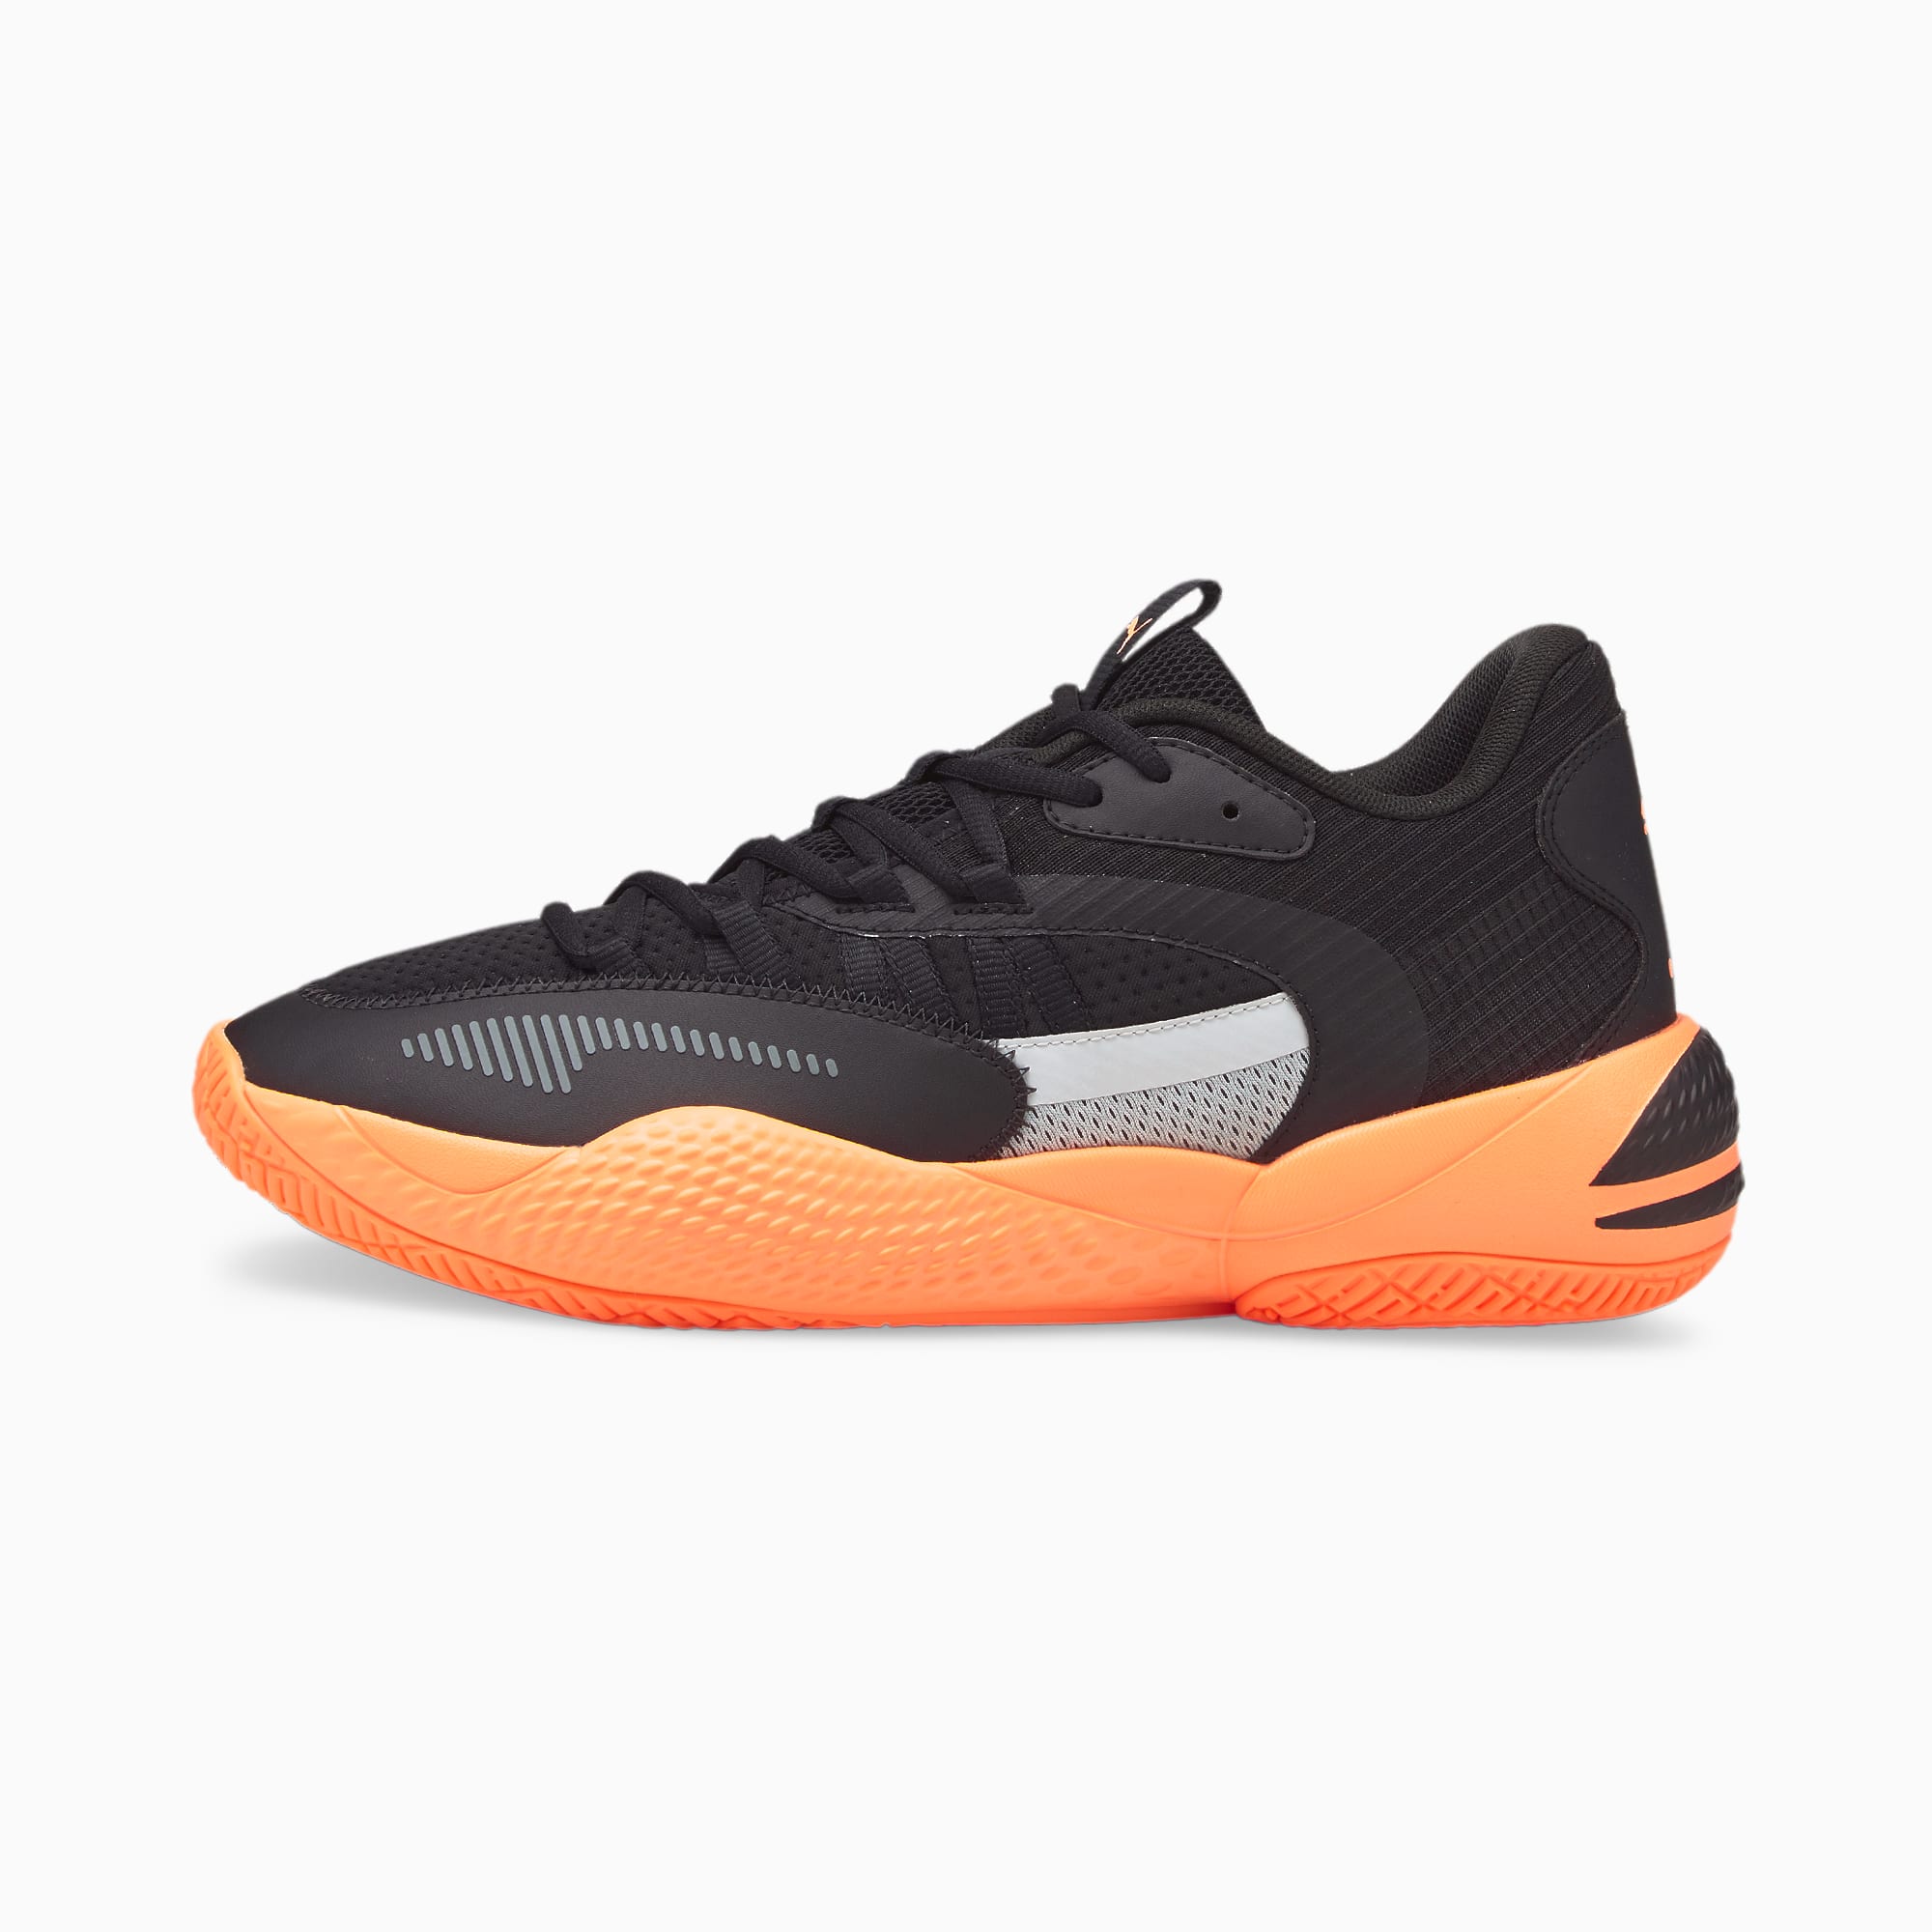 Court Rider 2 0 Basketball Shoes Puma Black Neon Citrus PUMA Shop